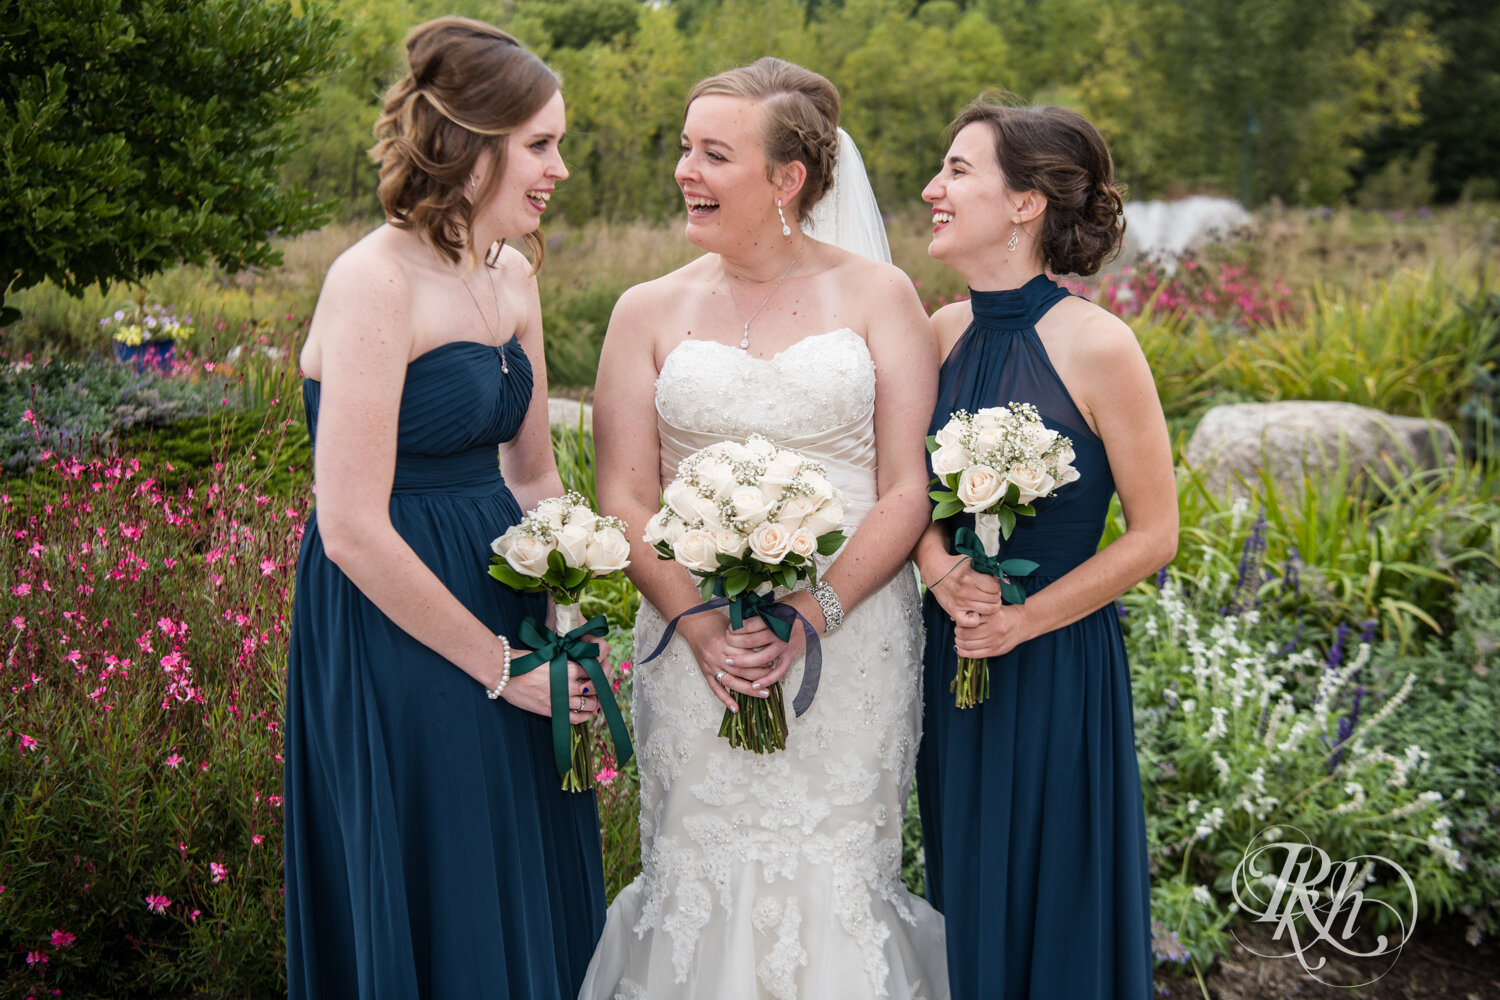 Wedding party in blue dresses laugh at Eagan Community Center in Eagan, Minnesota.